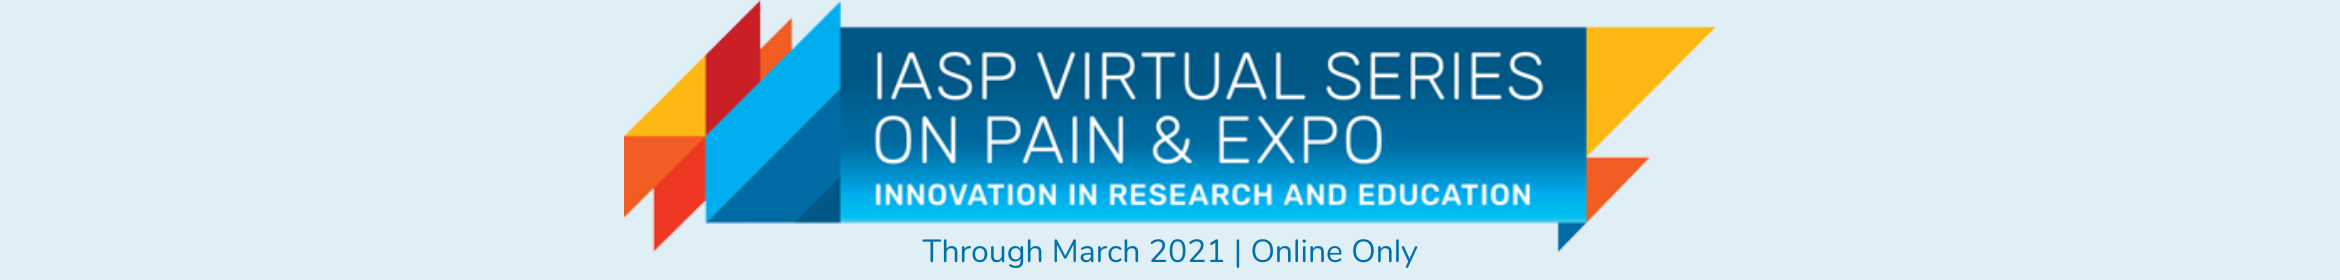 2020-2021 IASP Virtual Series on Pain & Expo Main banner